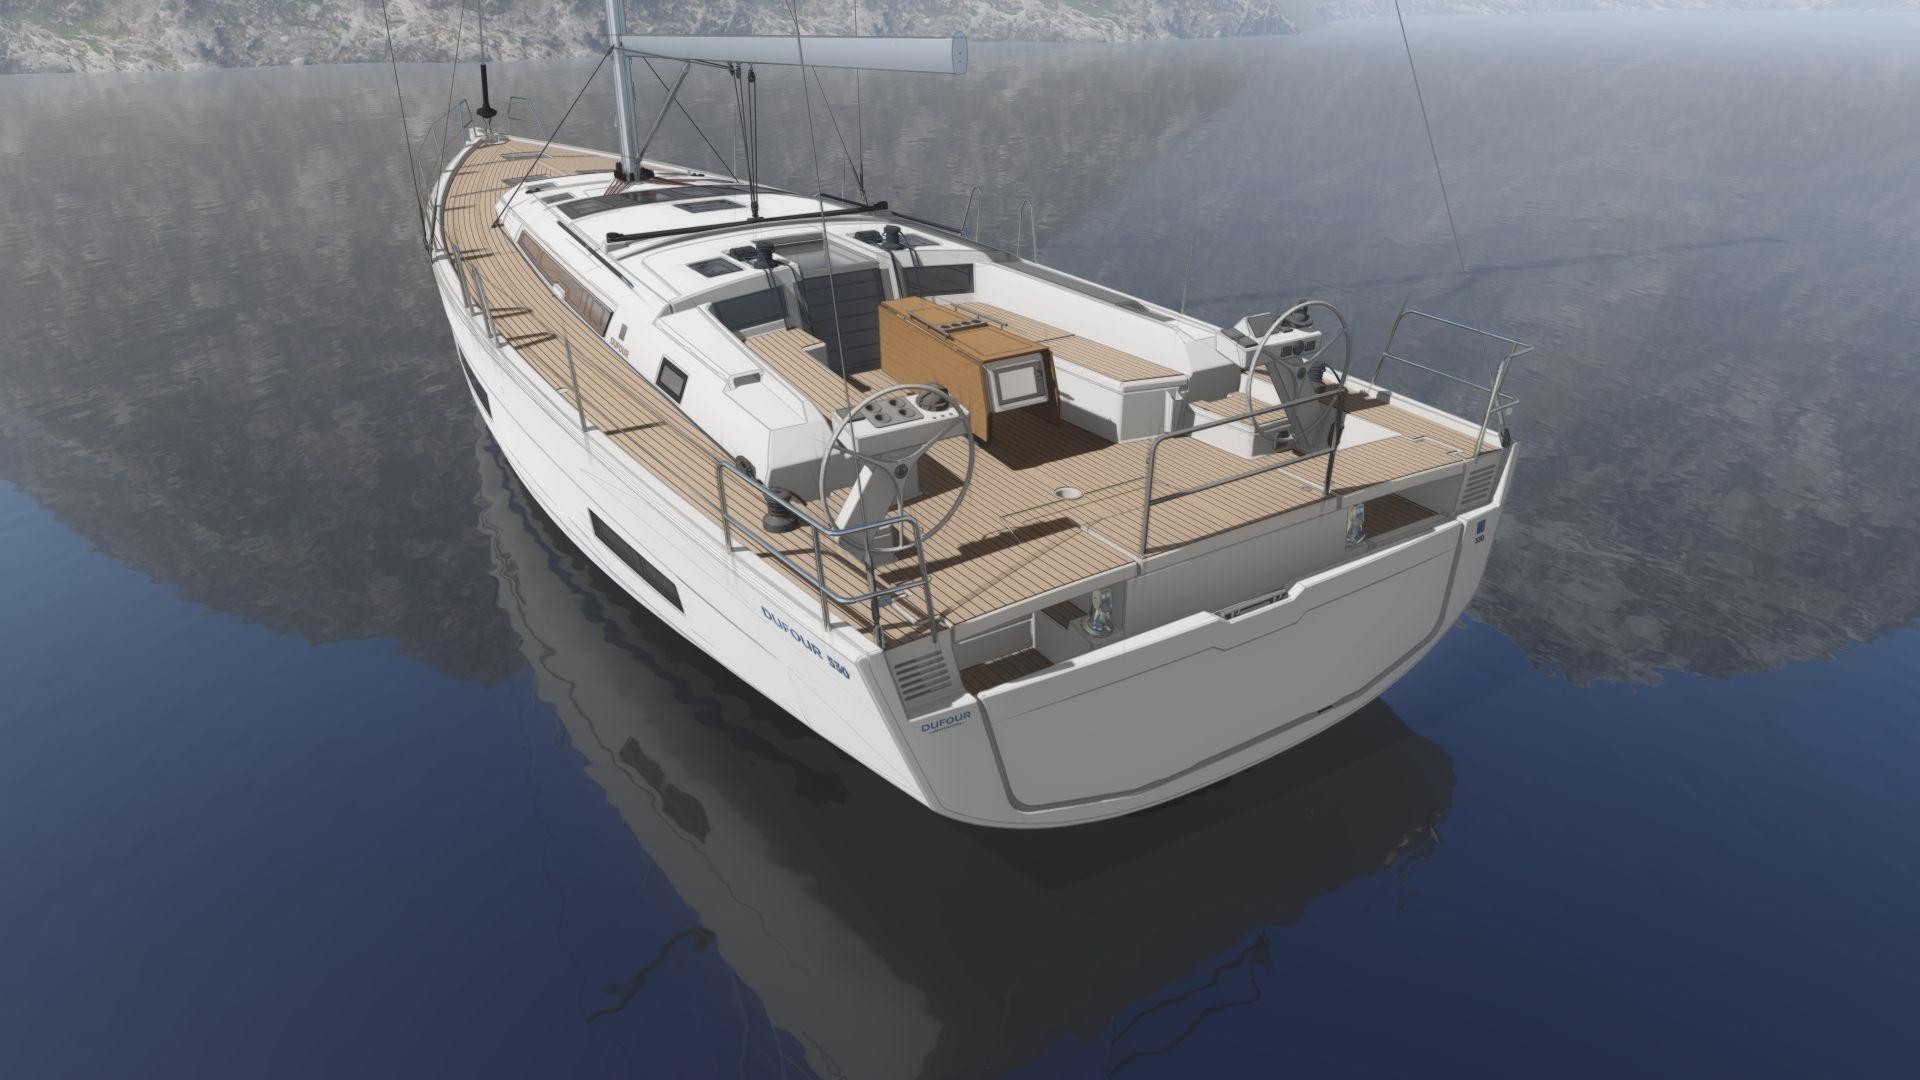 Dufour 530 eletta Boat of the Year 2020 al Boot Dusserdolf